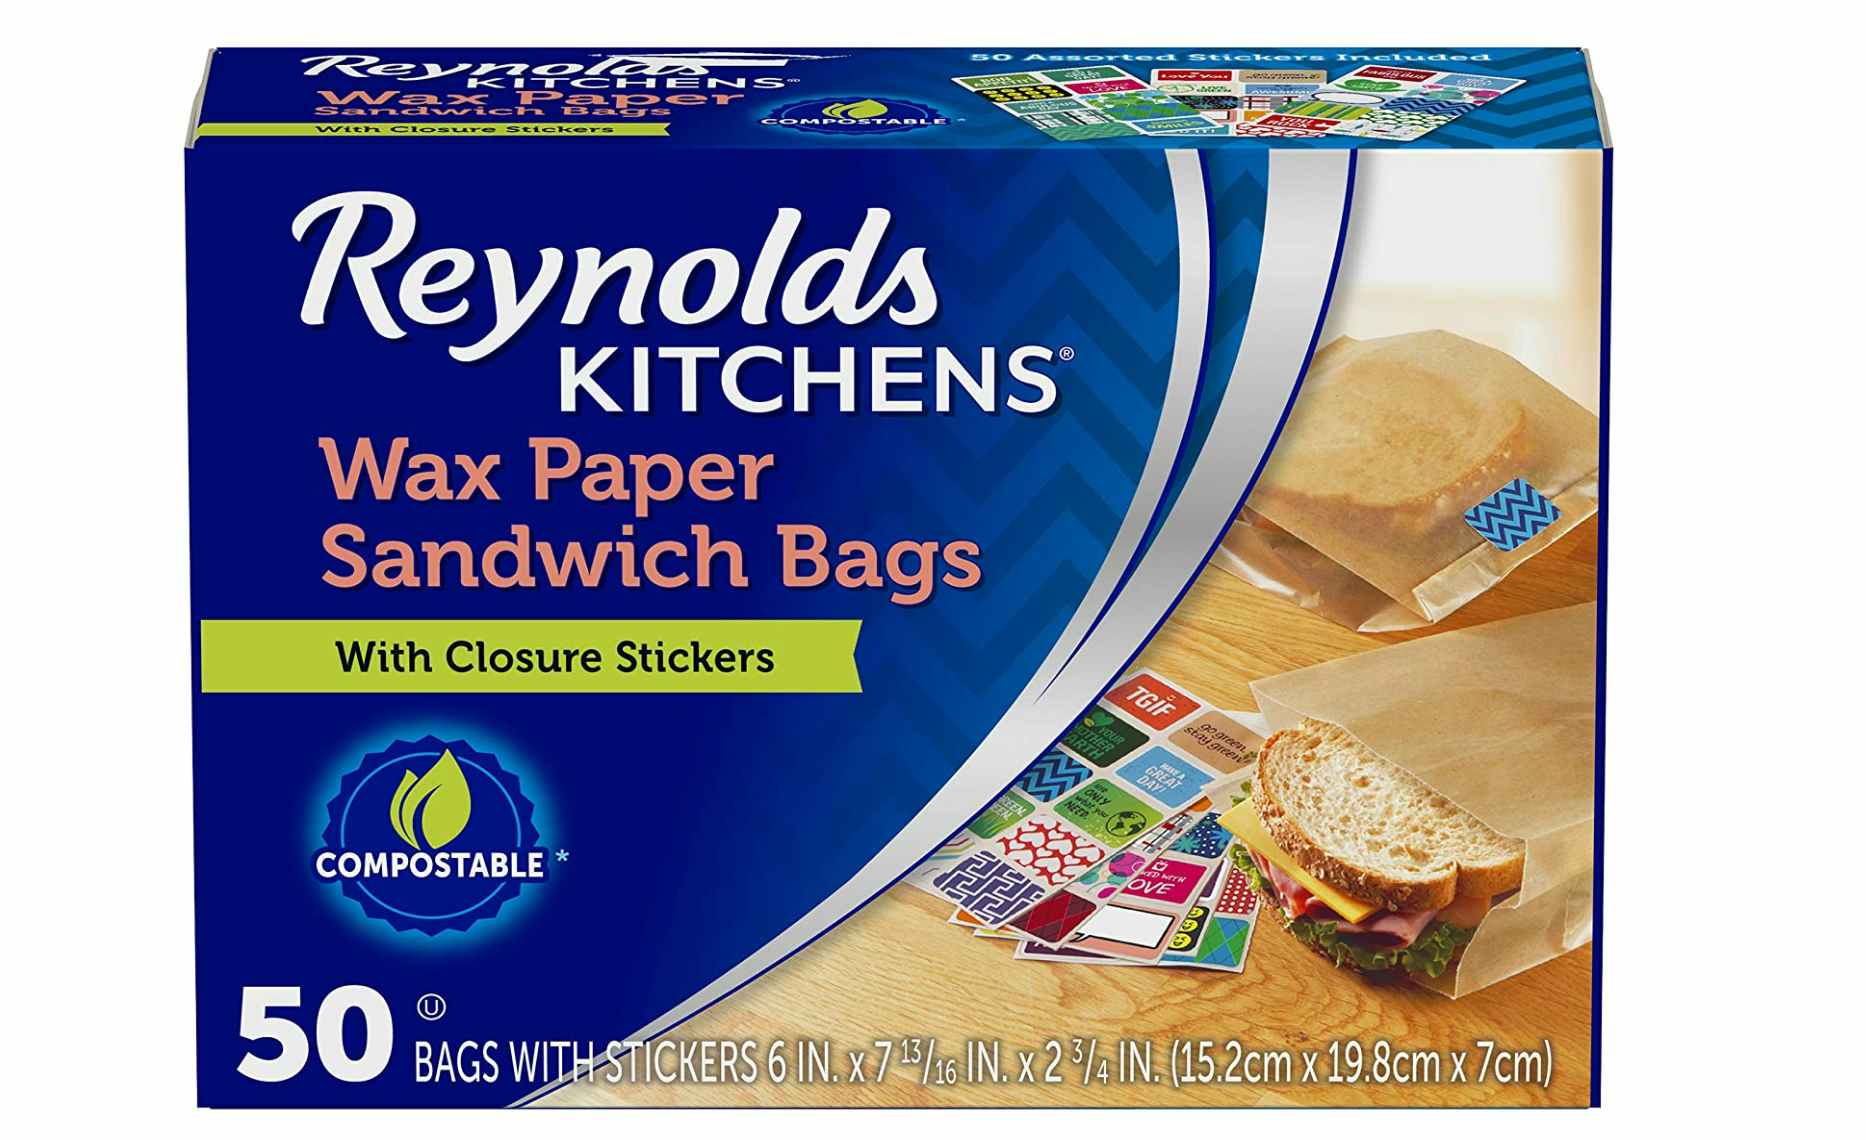 Reynolds Kitchens Wax Paper Sandwich Bags